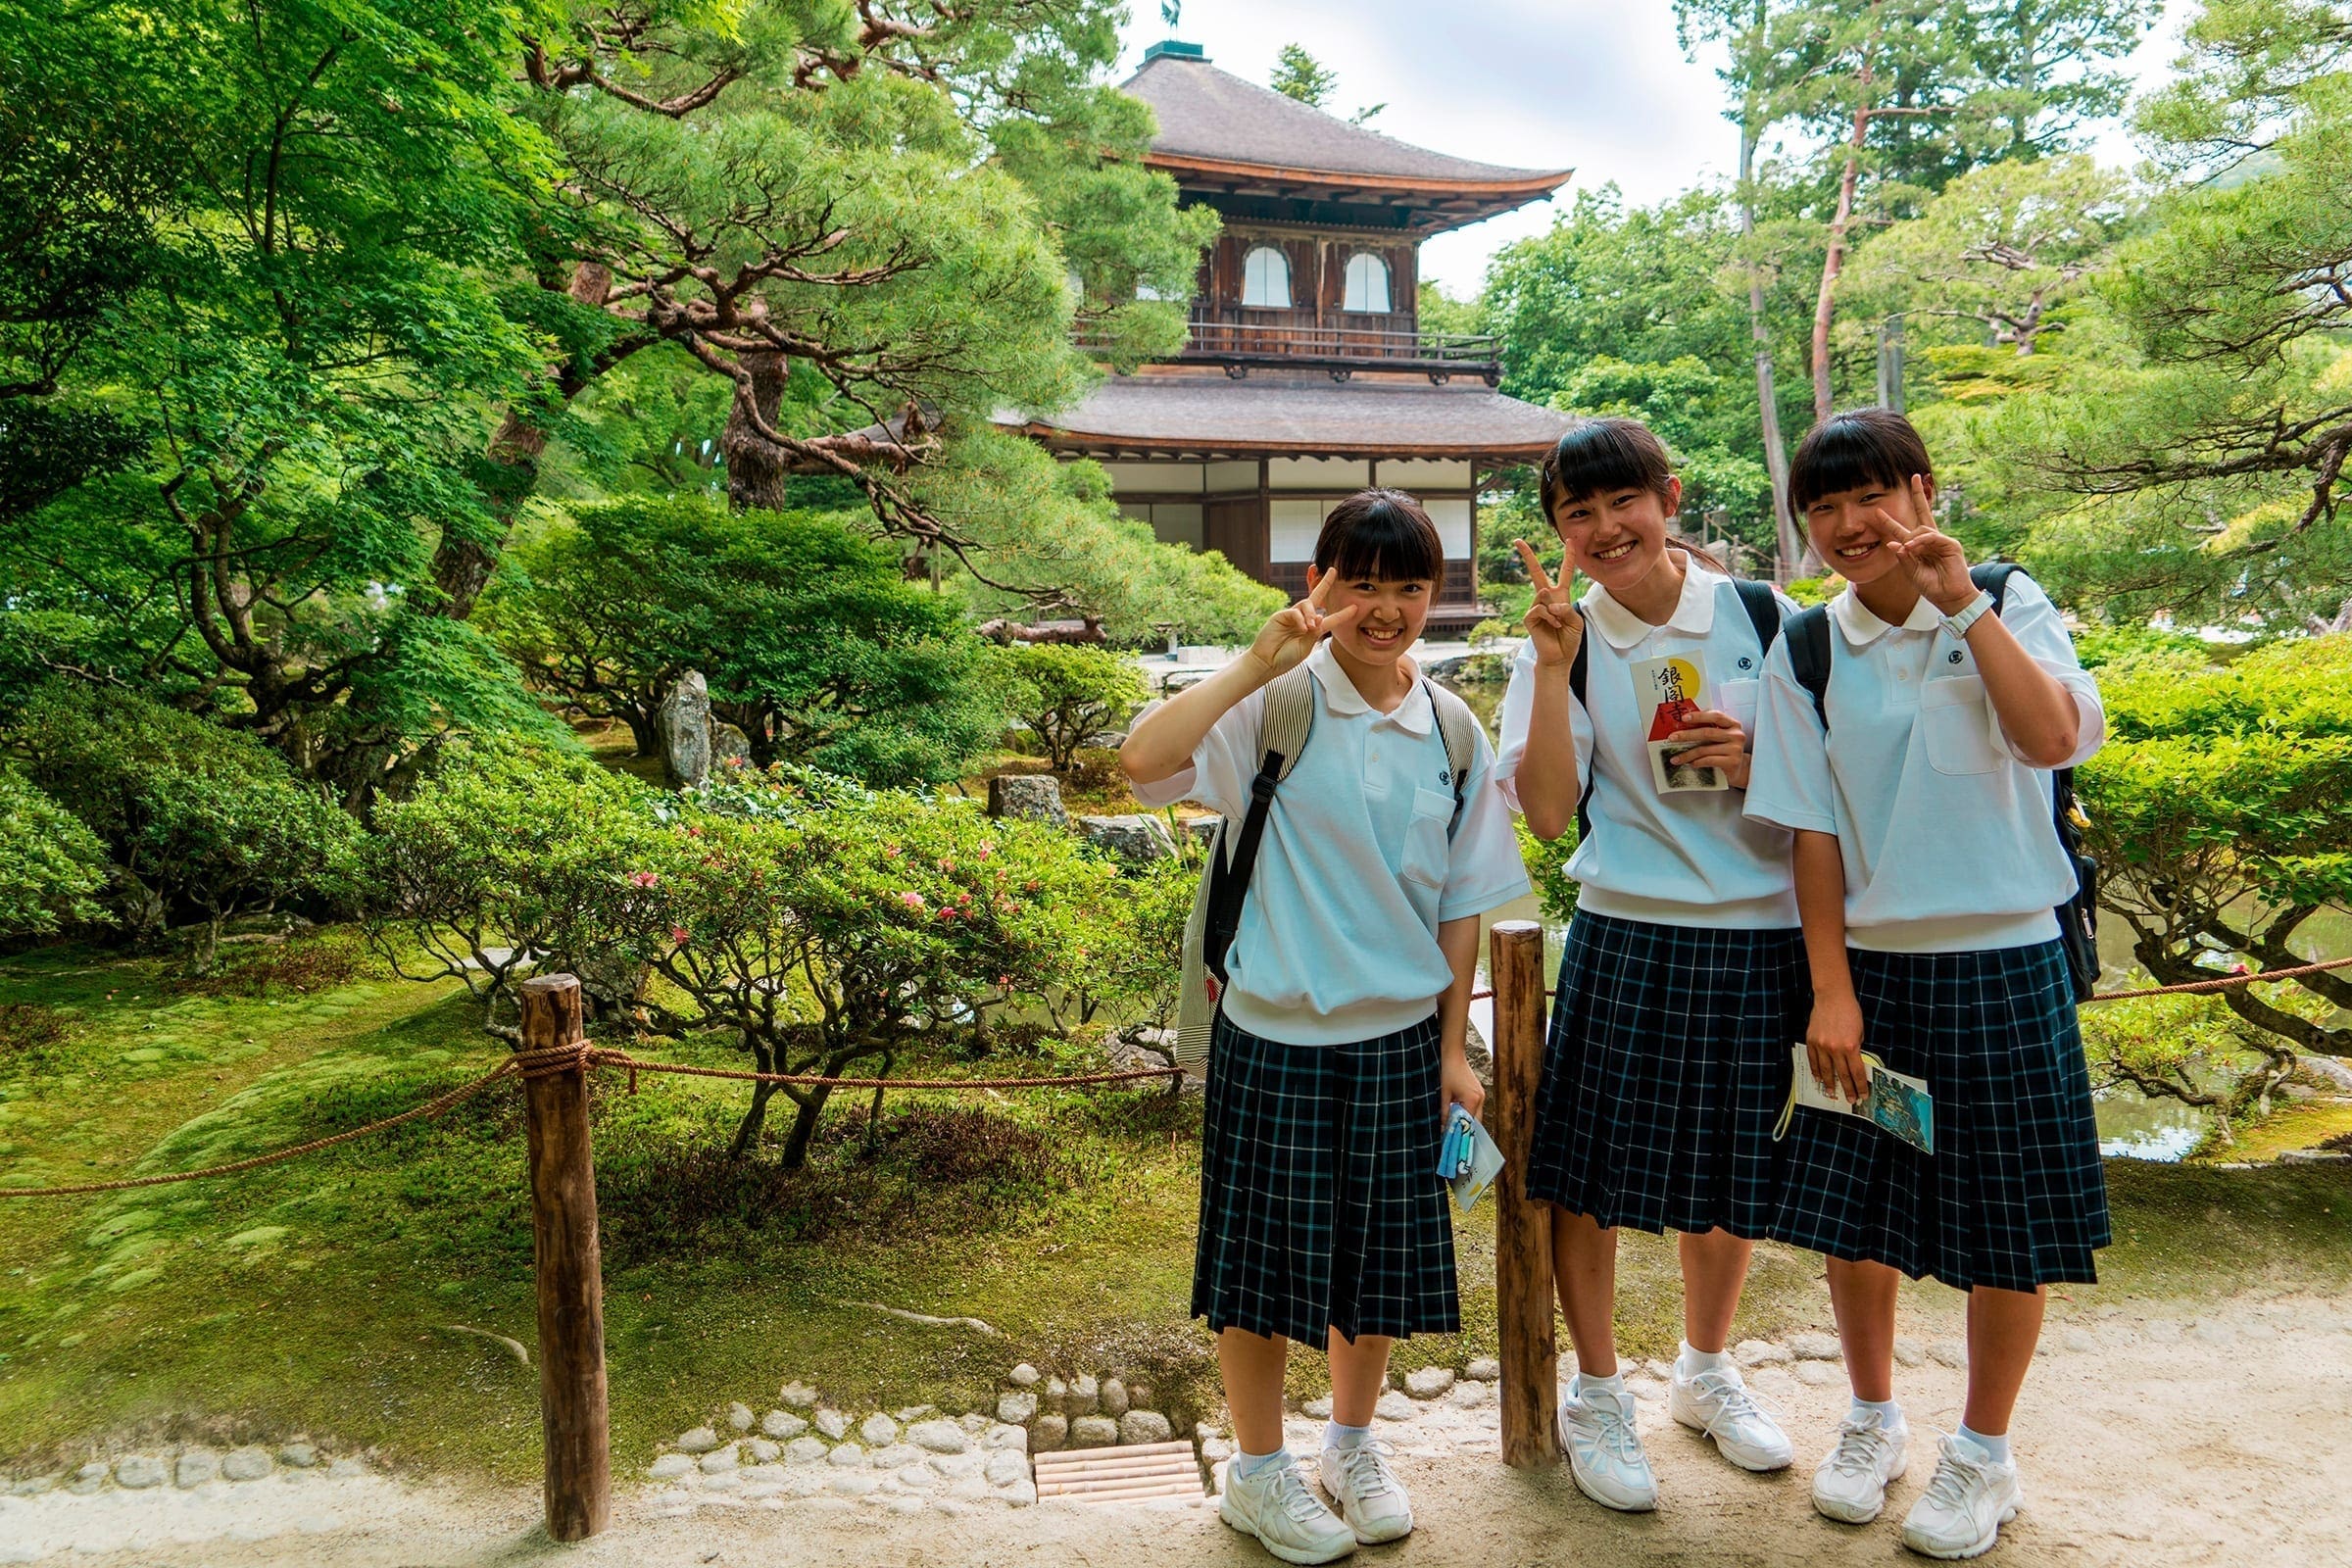 Glade piger i Kyoto